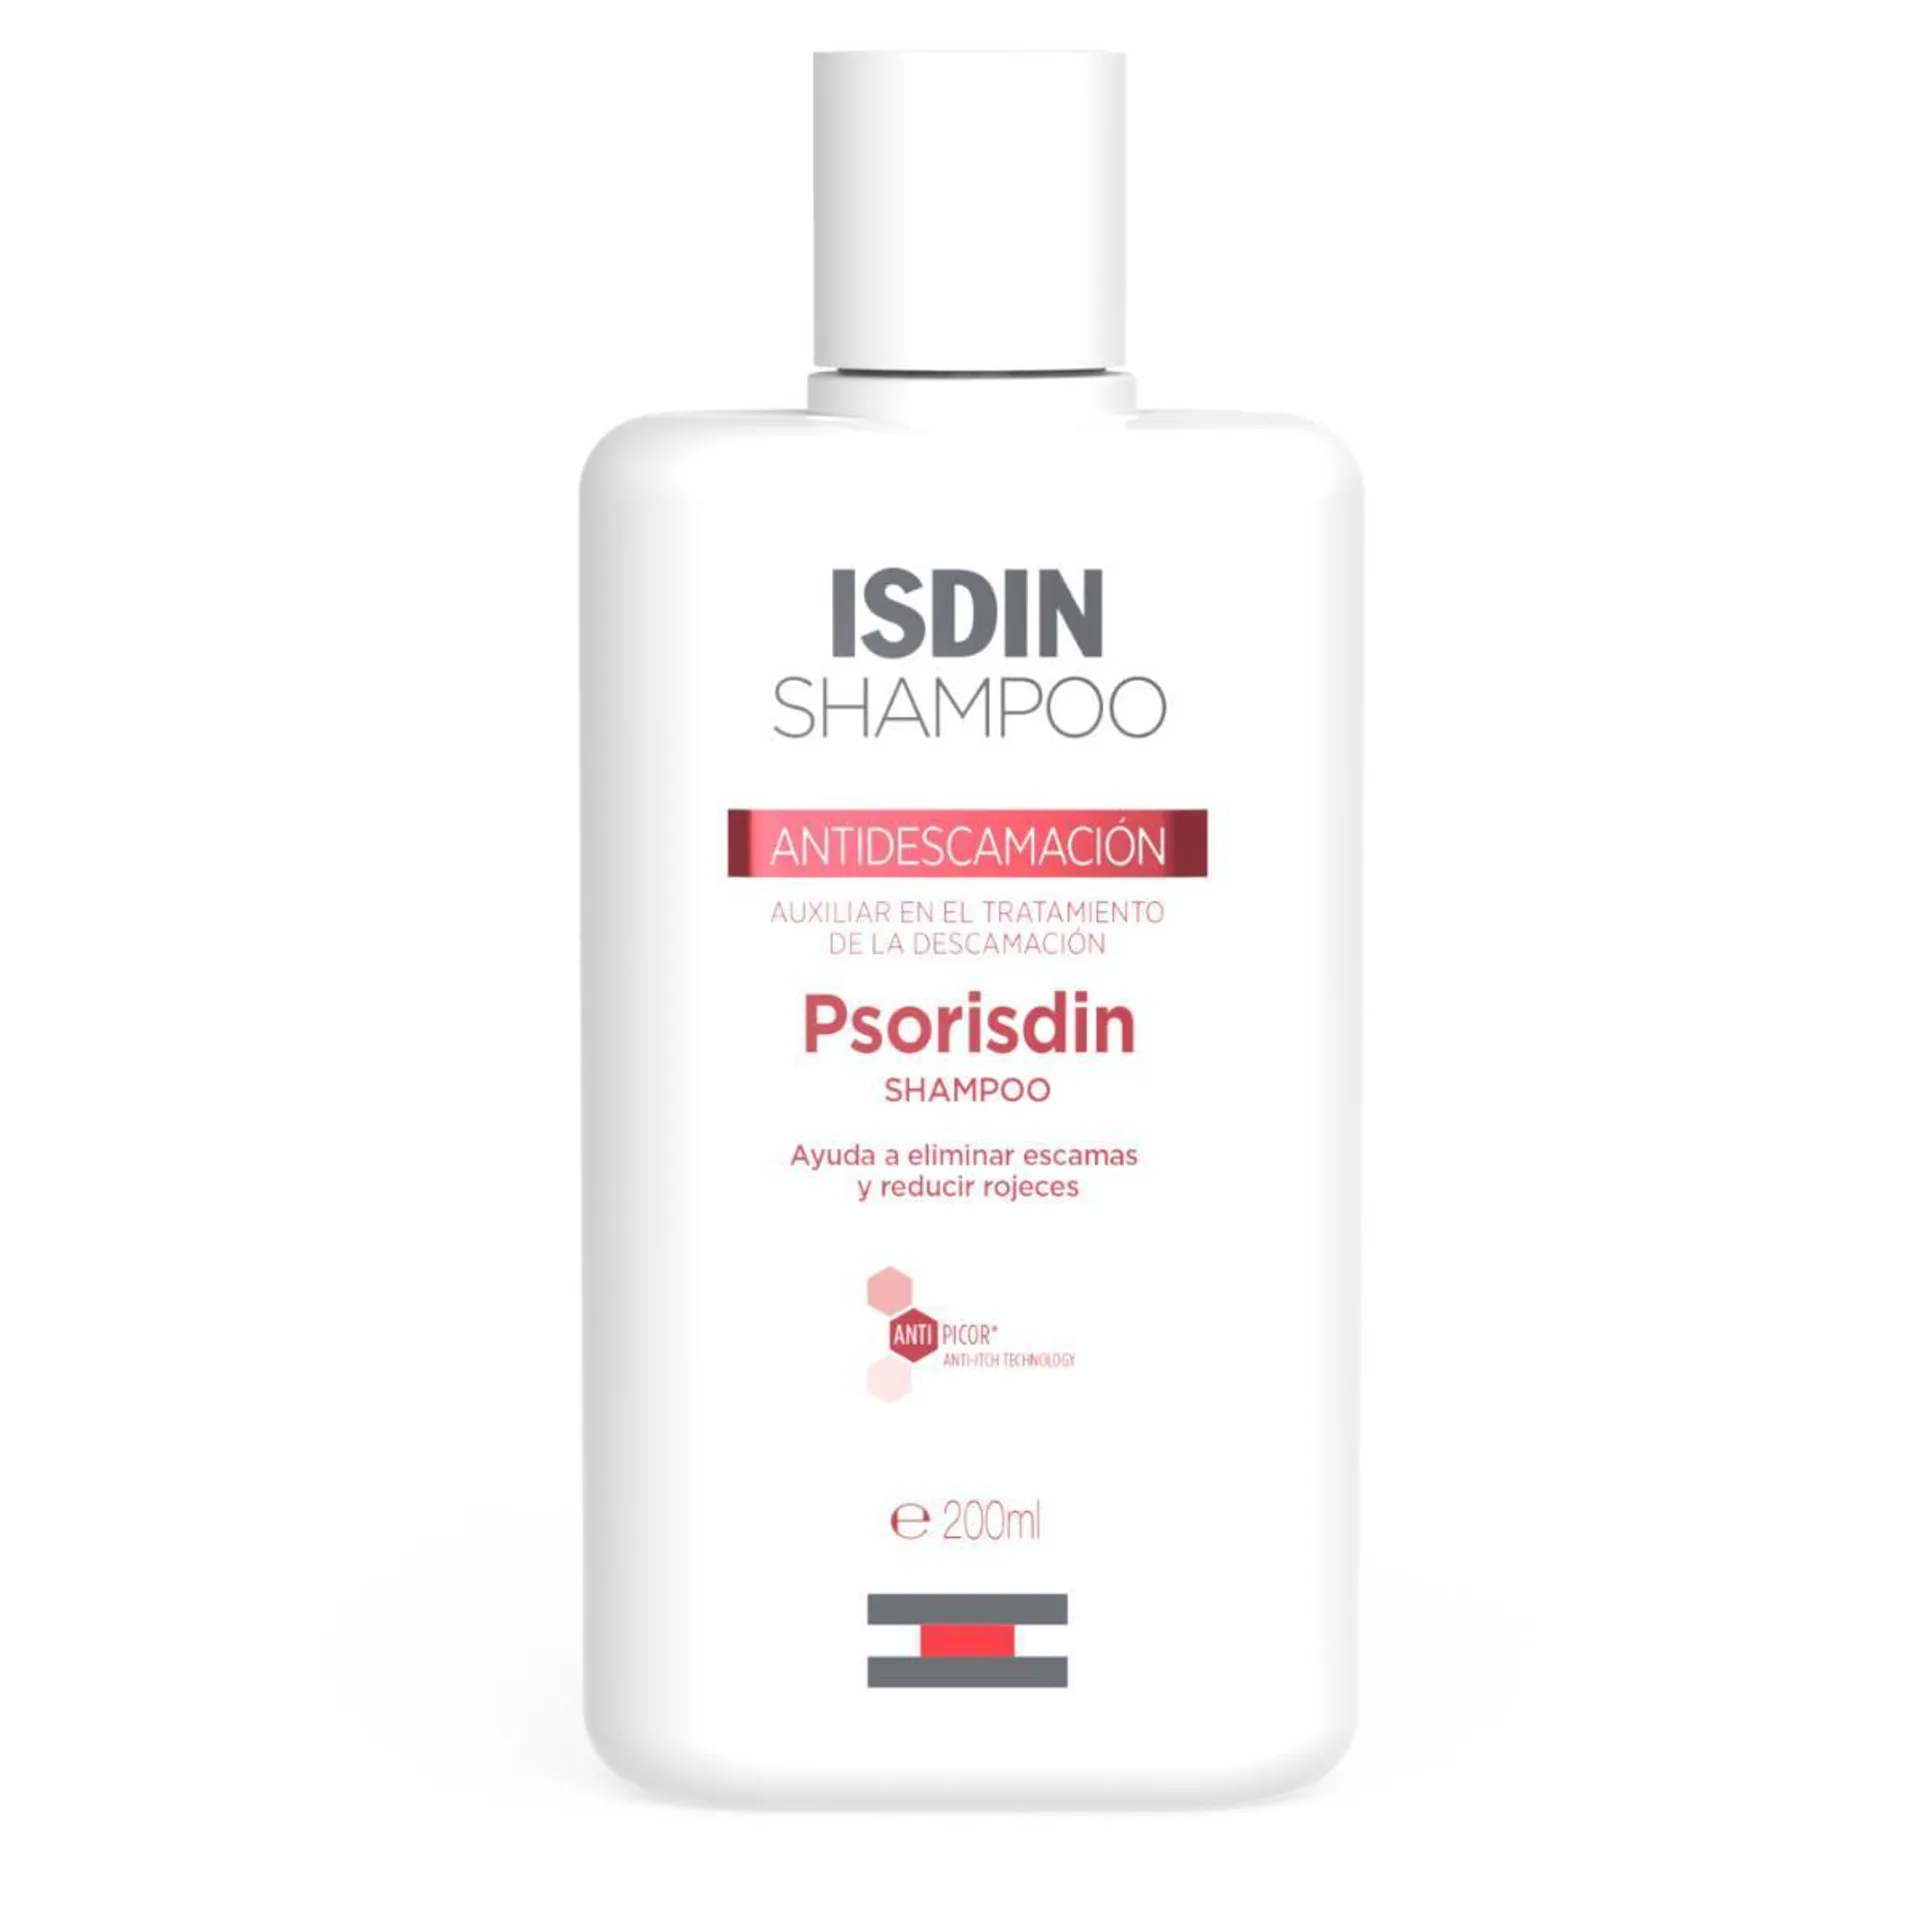 Isdin Psorisdin Shampoo, antidescamación 200ml.